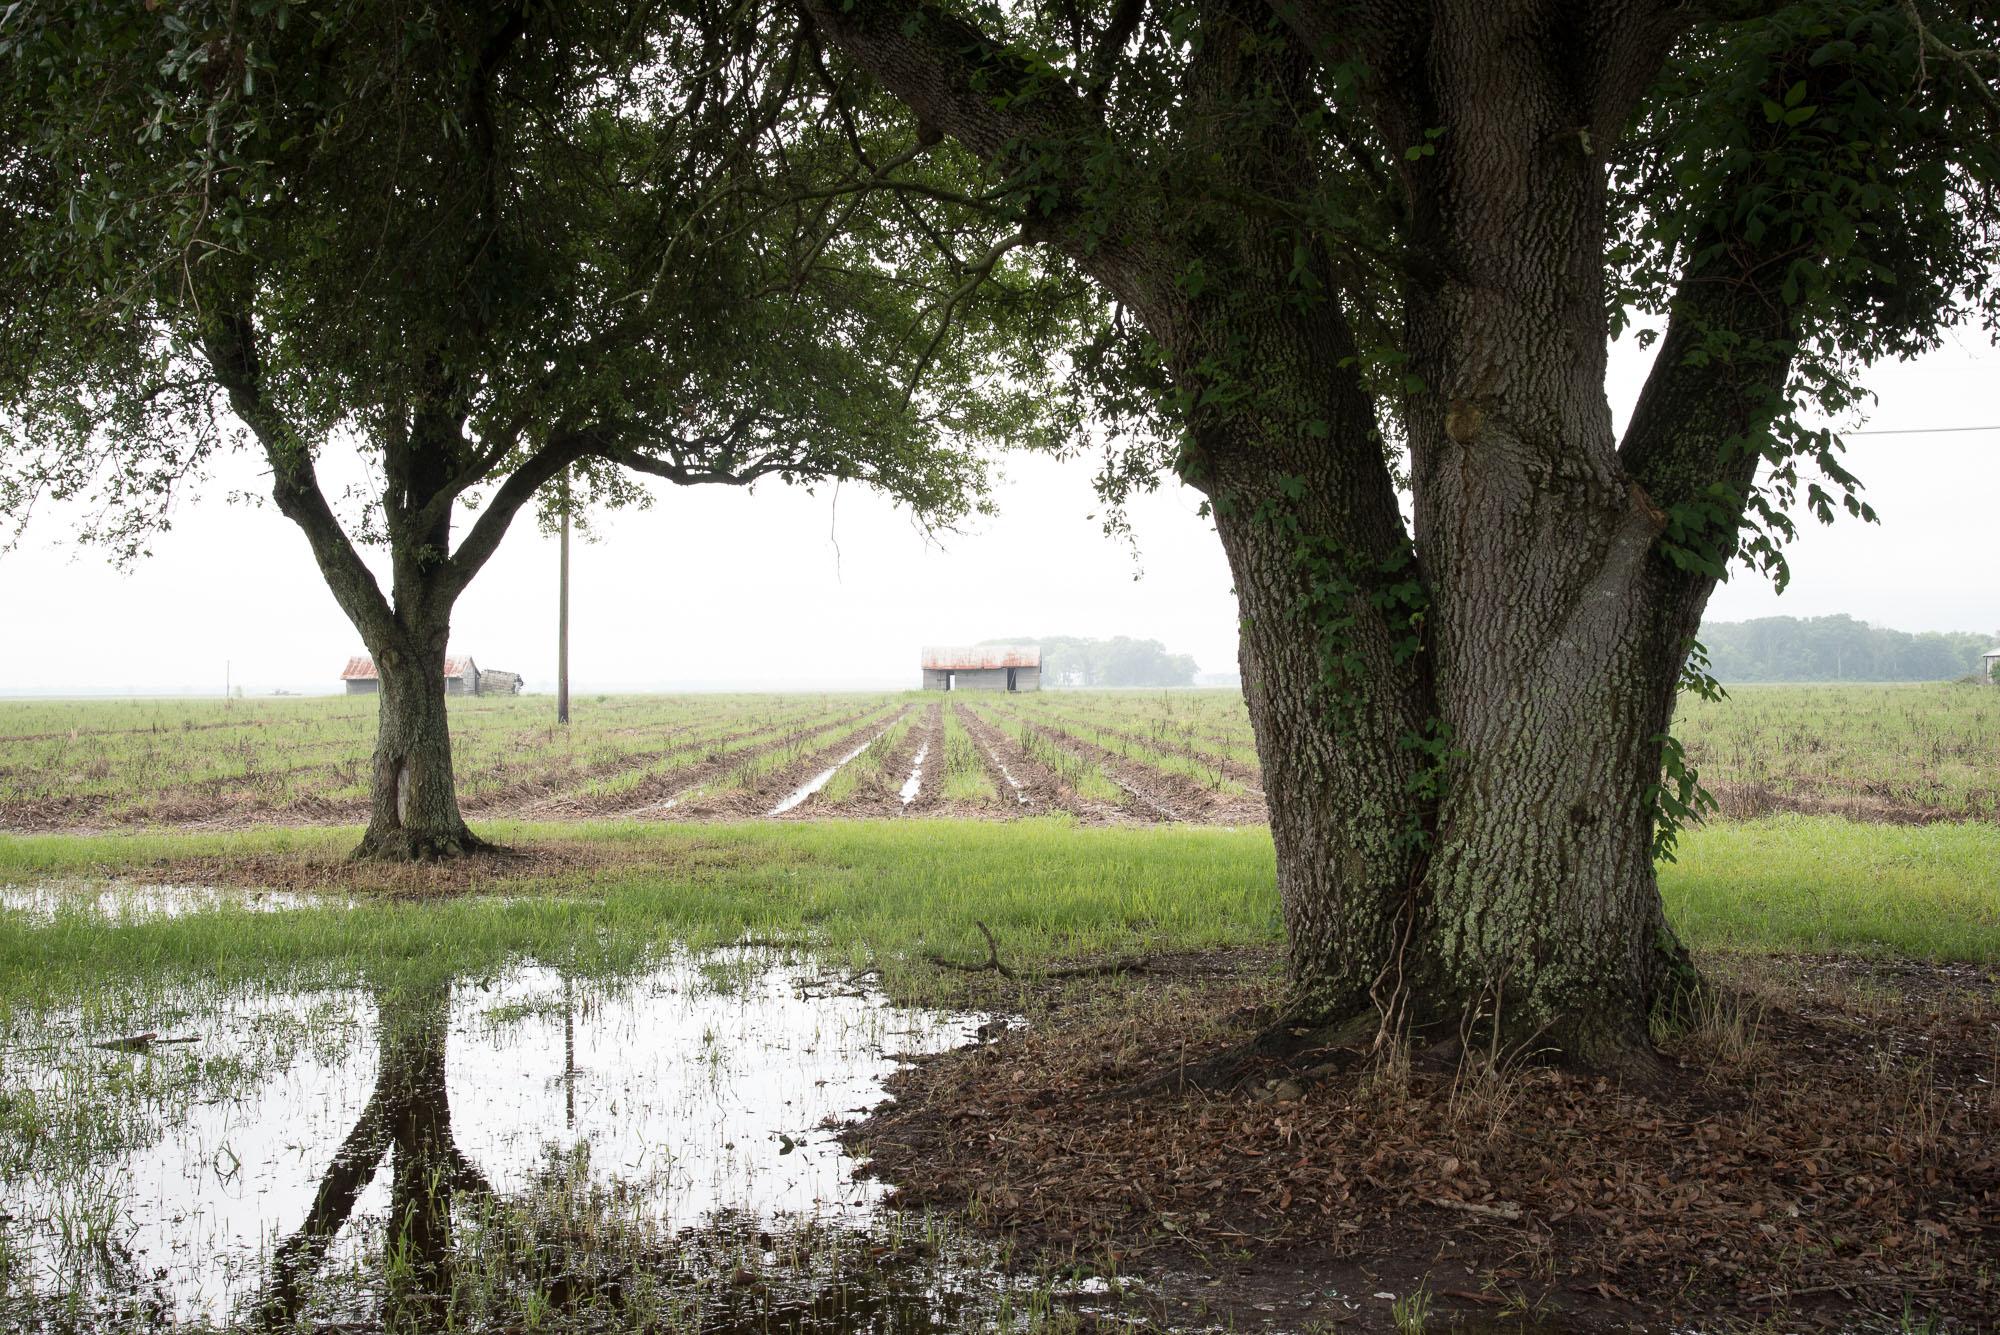  Slave Dwellings and Fields, St James Parish, Louisiana 